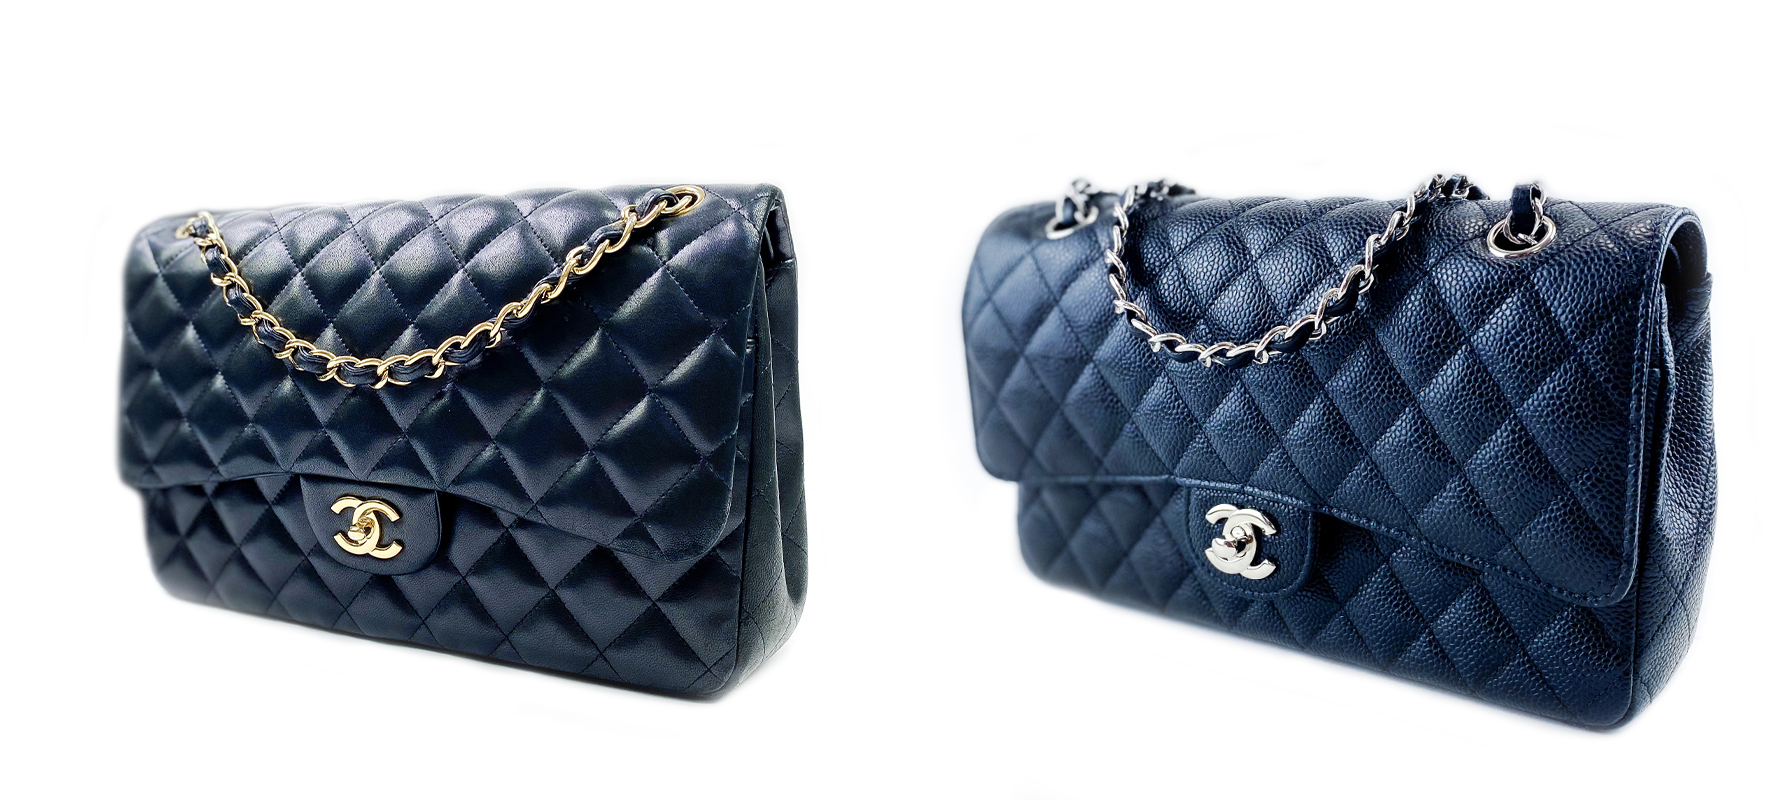 Chanel Lambskin vs Chanel Caviar 